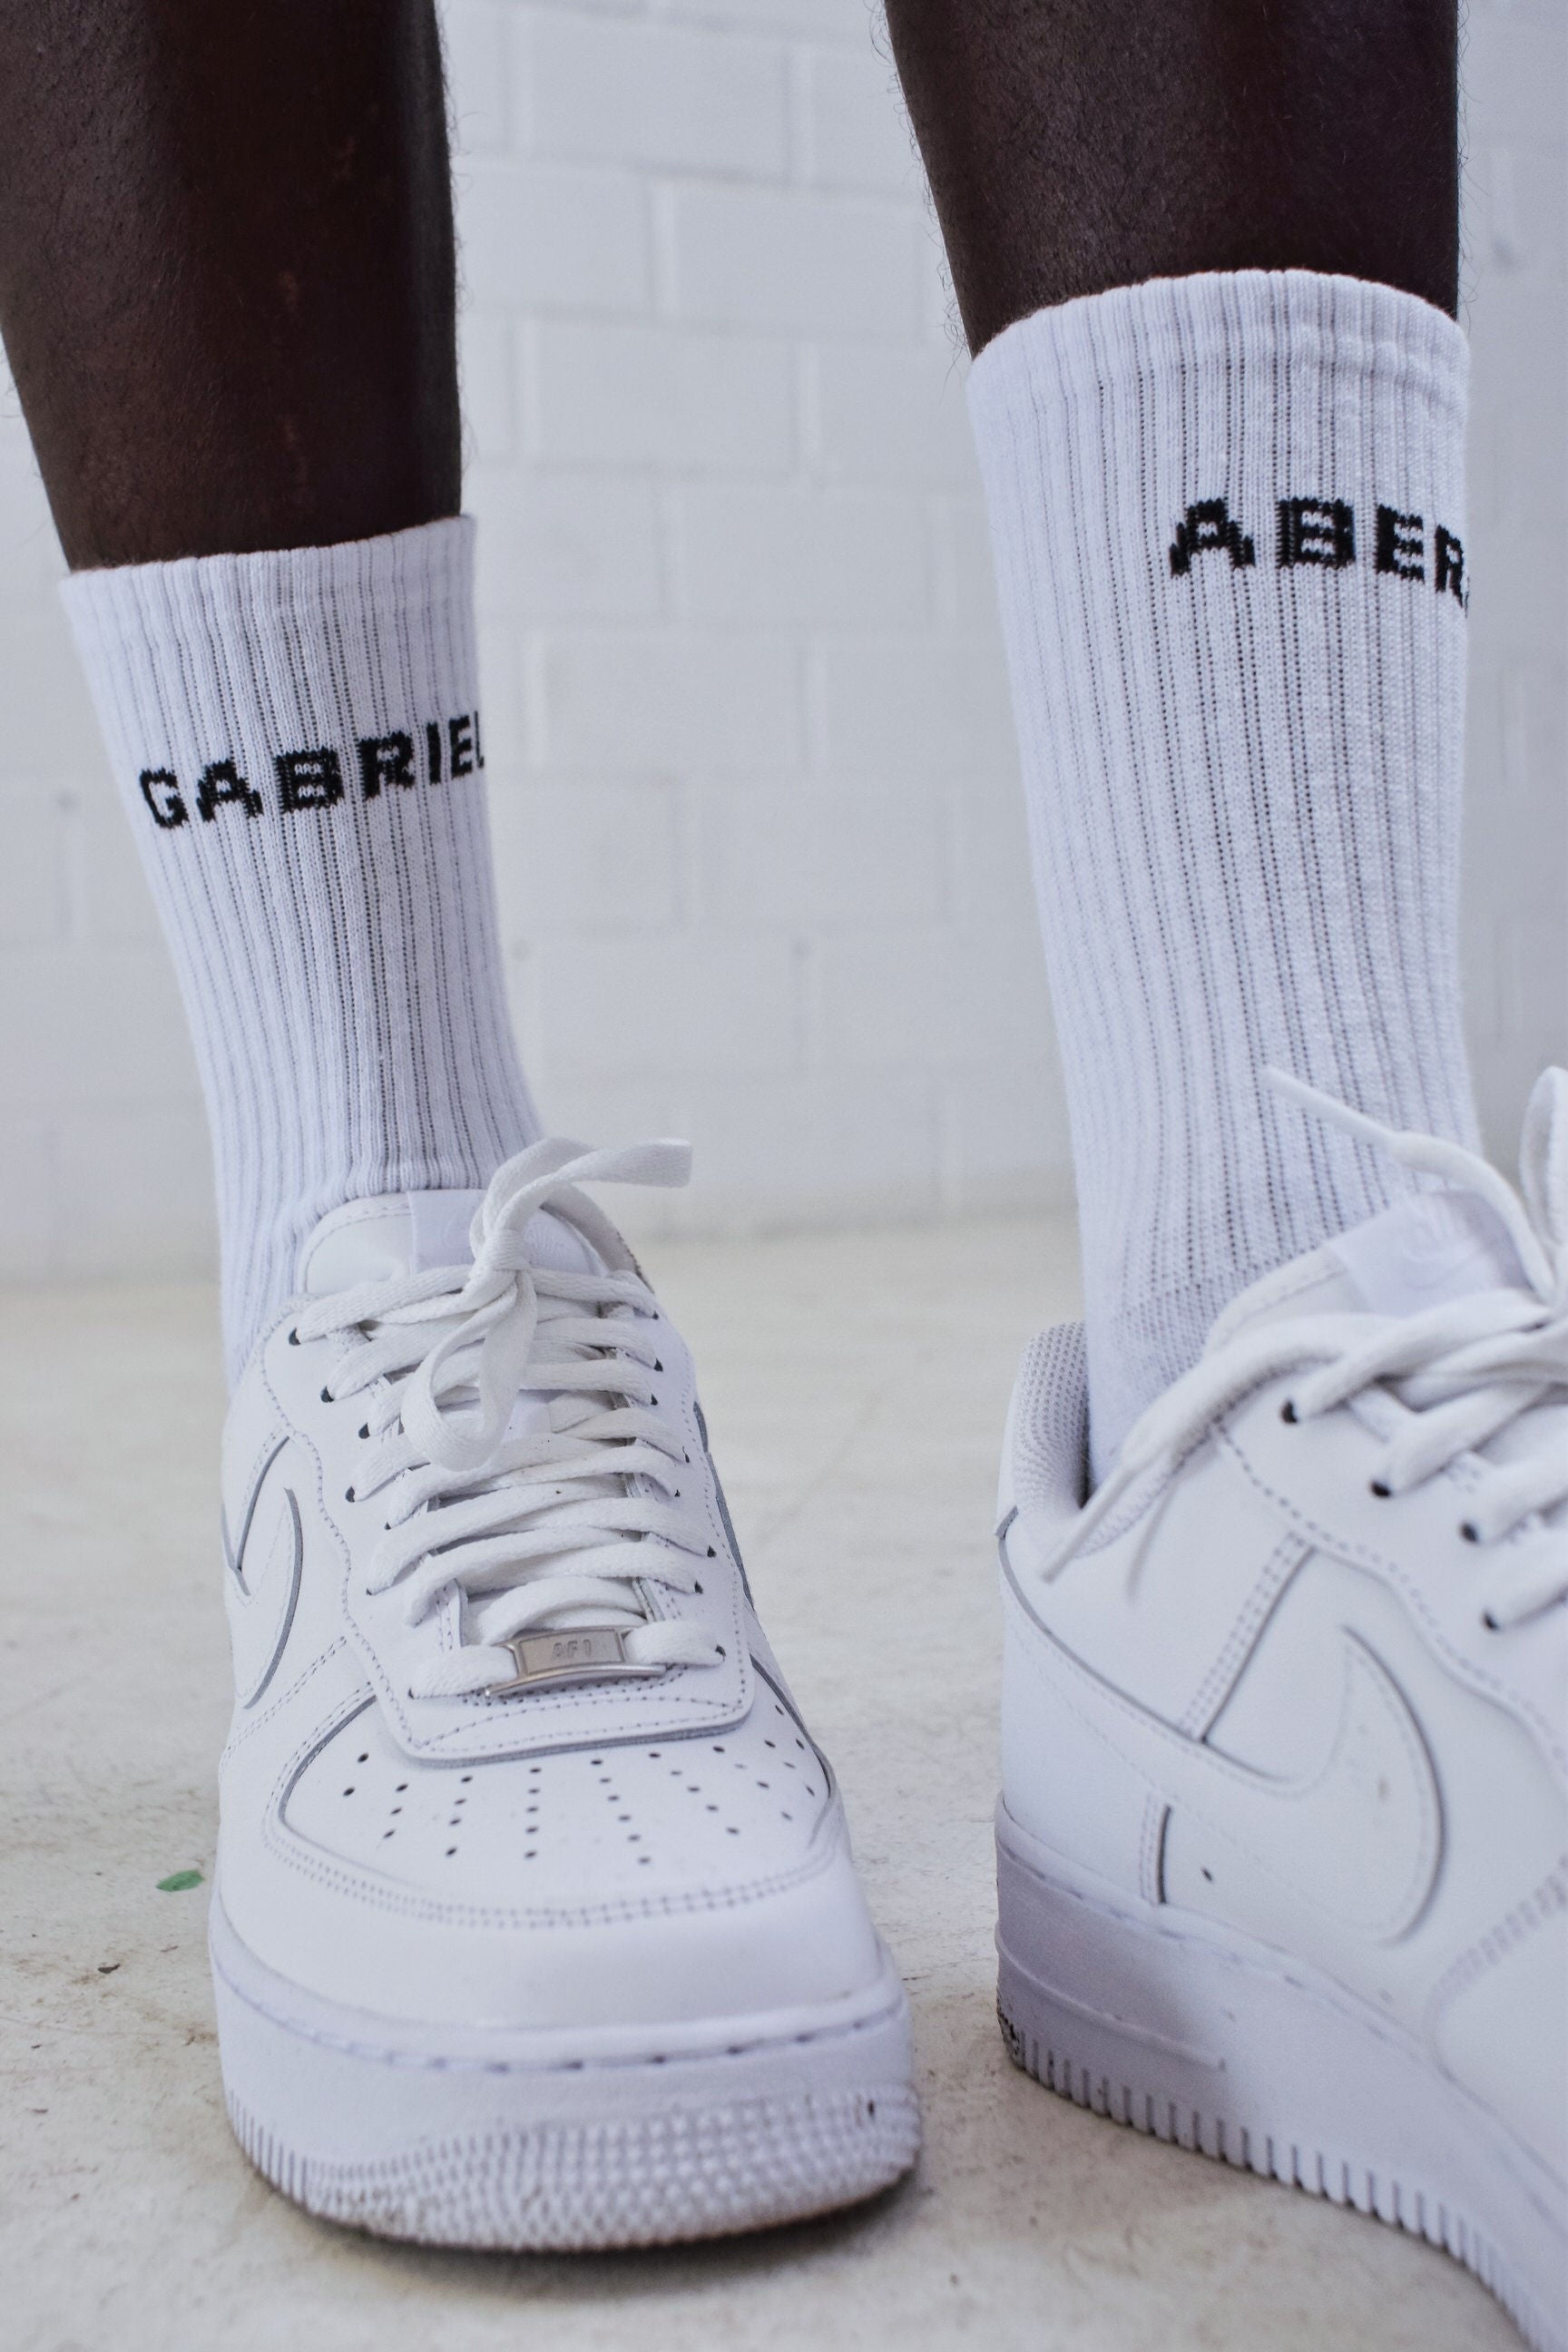 Model wearing White pair of socks with black brand name print